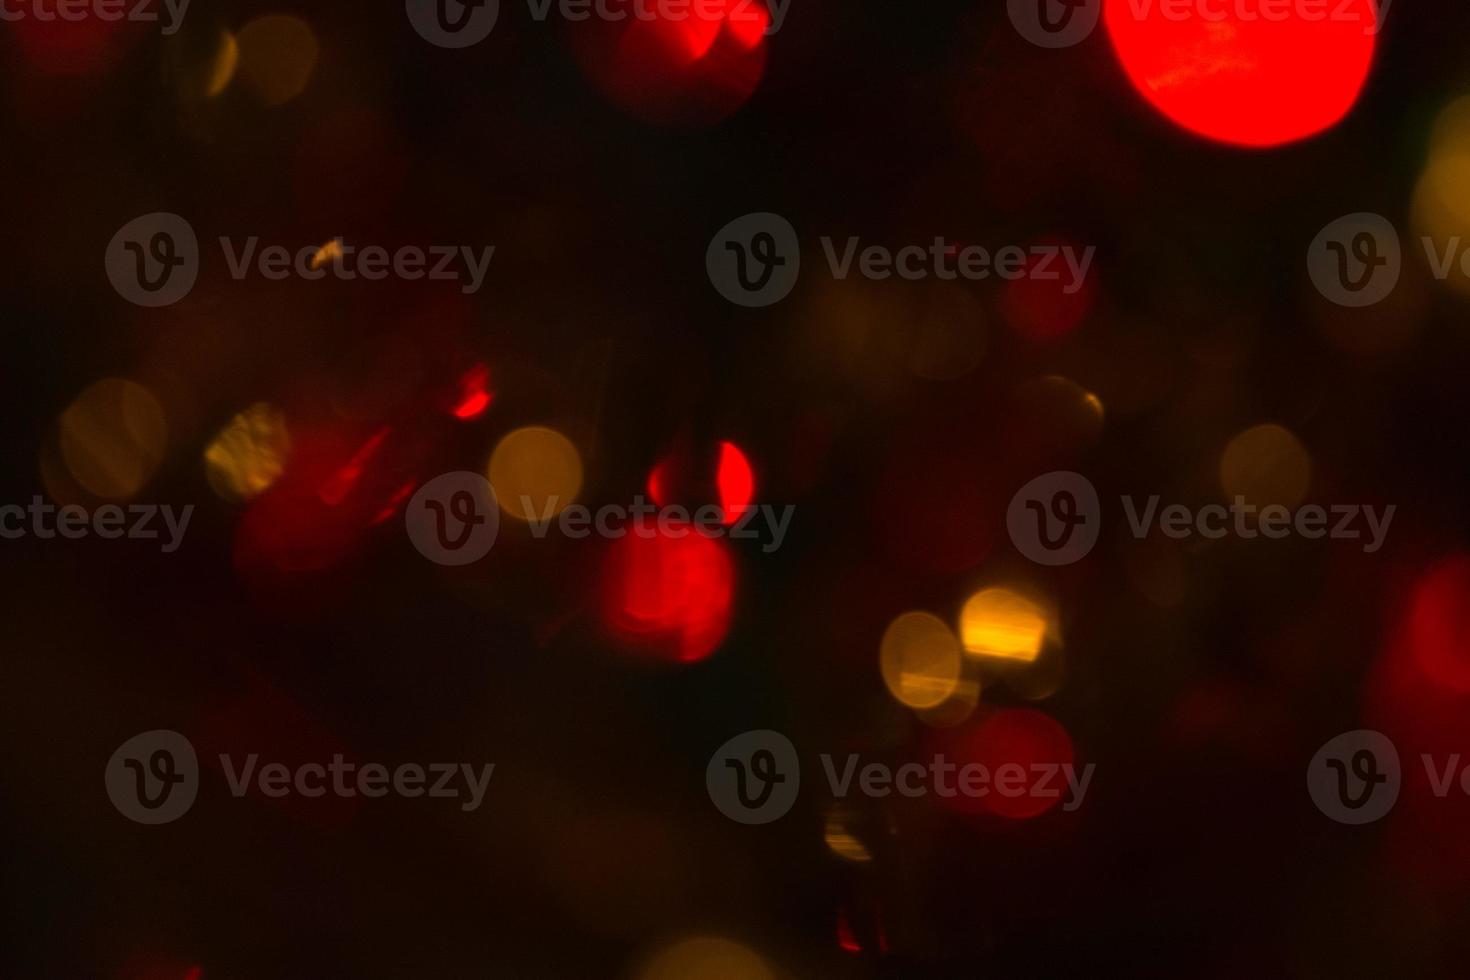 luces de navidad textura de fondo suave foto